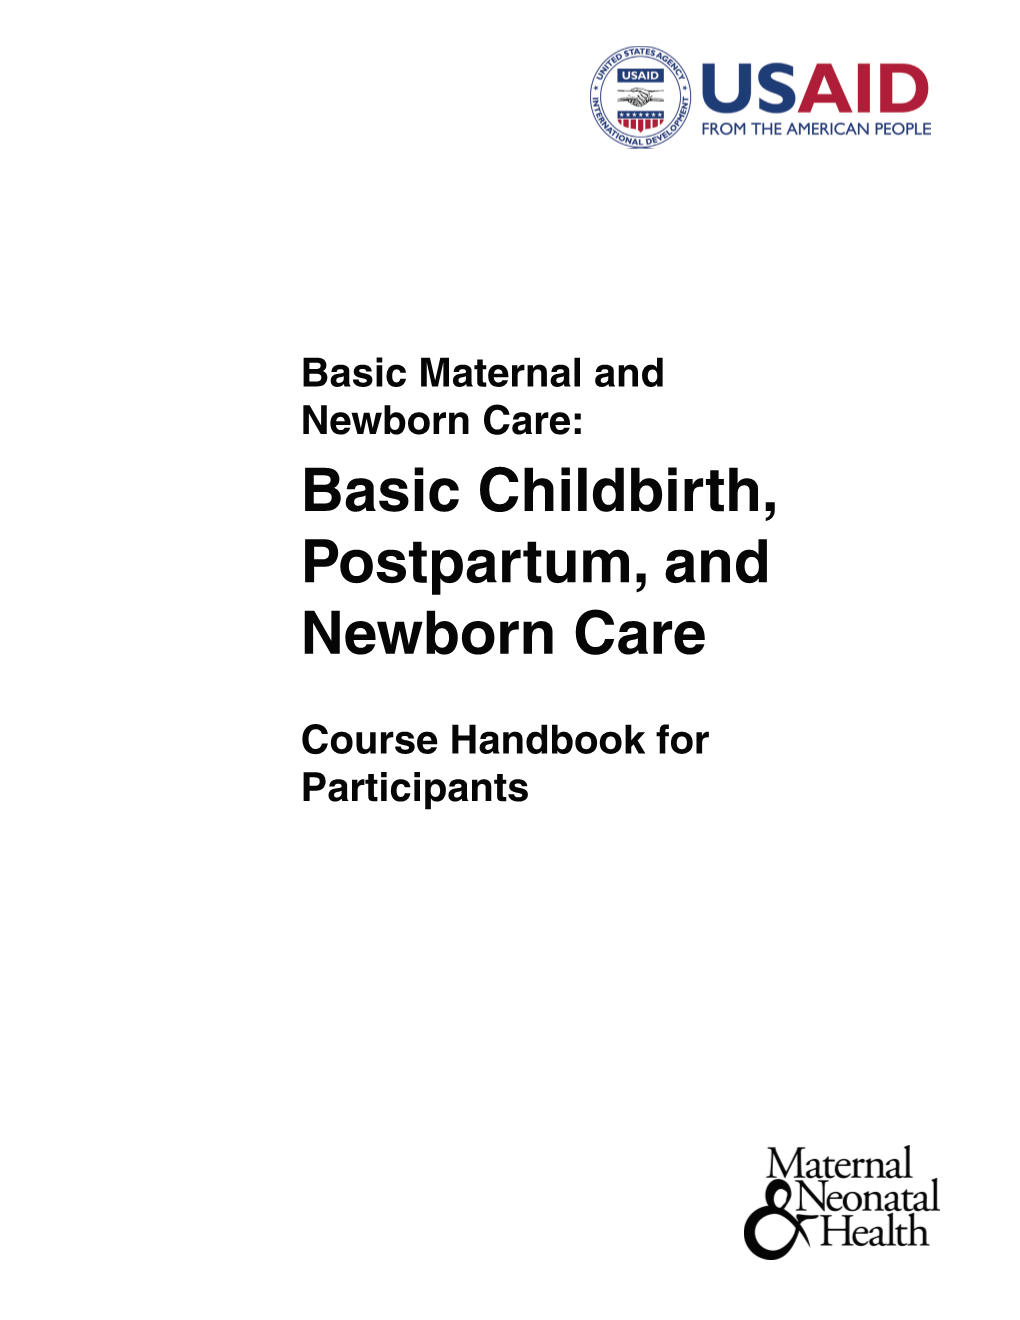 Basic Childbirth, Postpartum, and Newborn Care